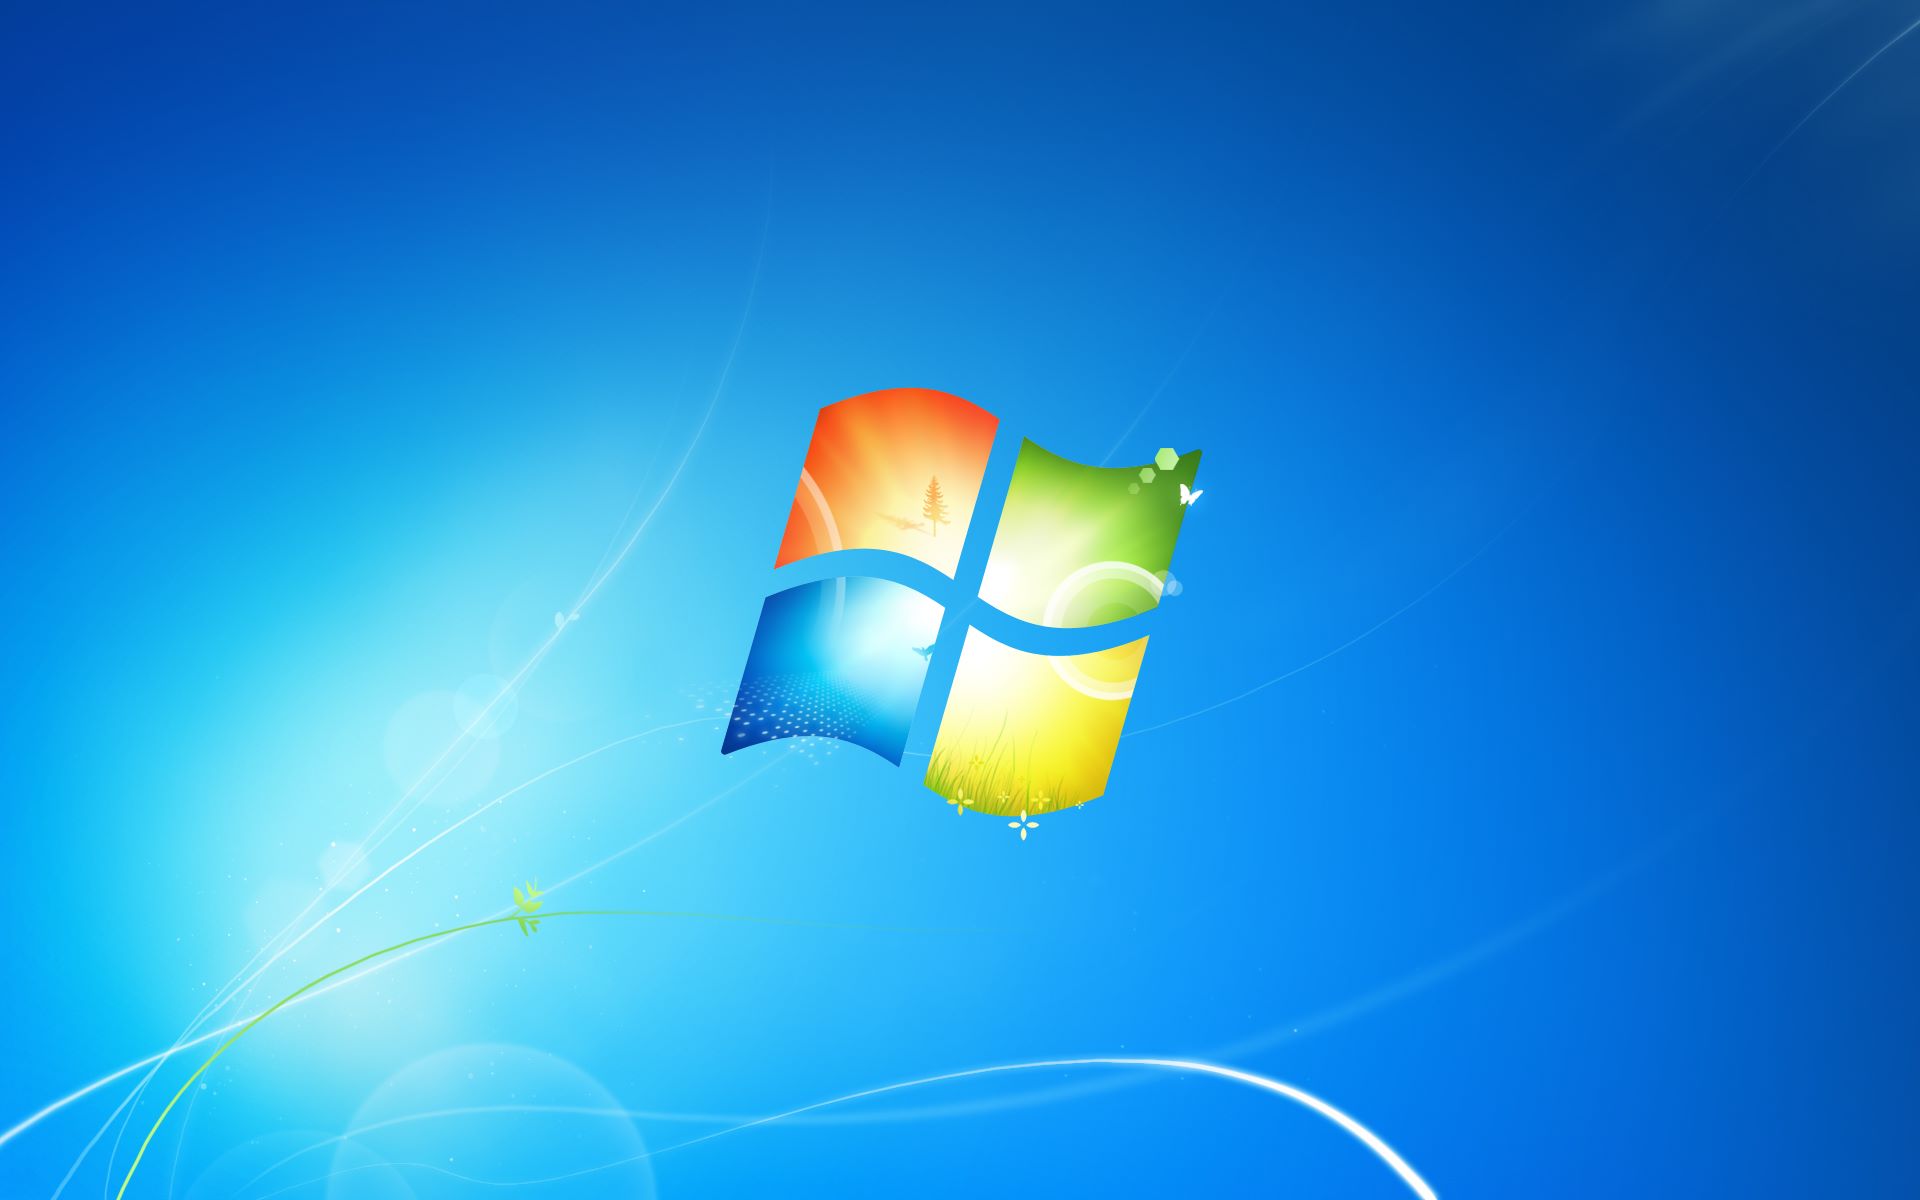 How To Change Default In Windows 7